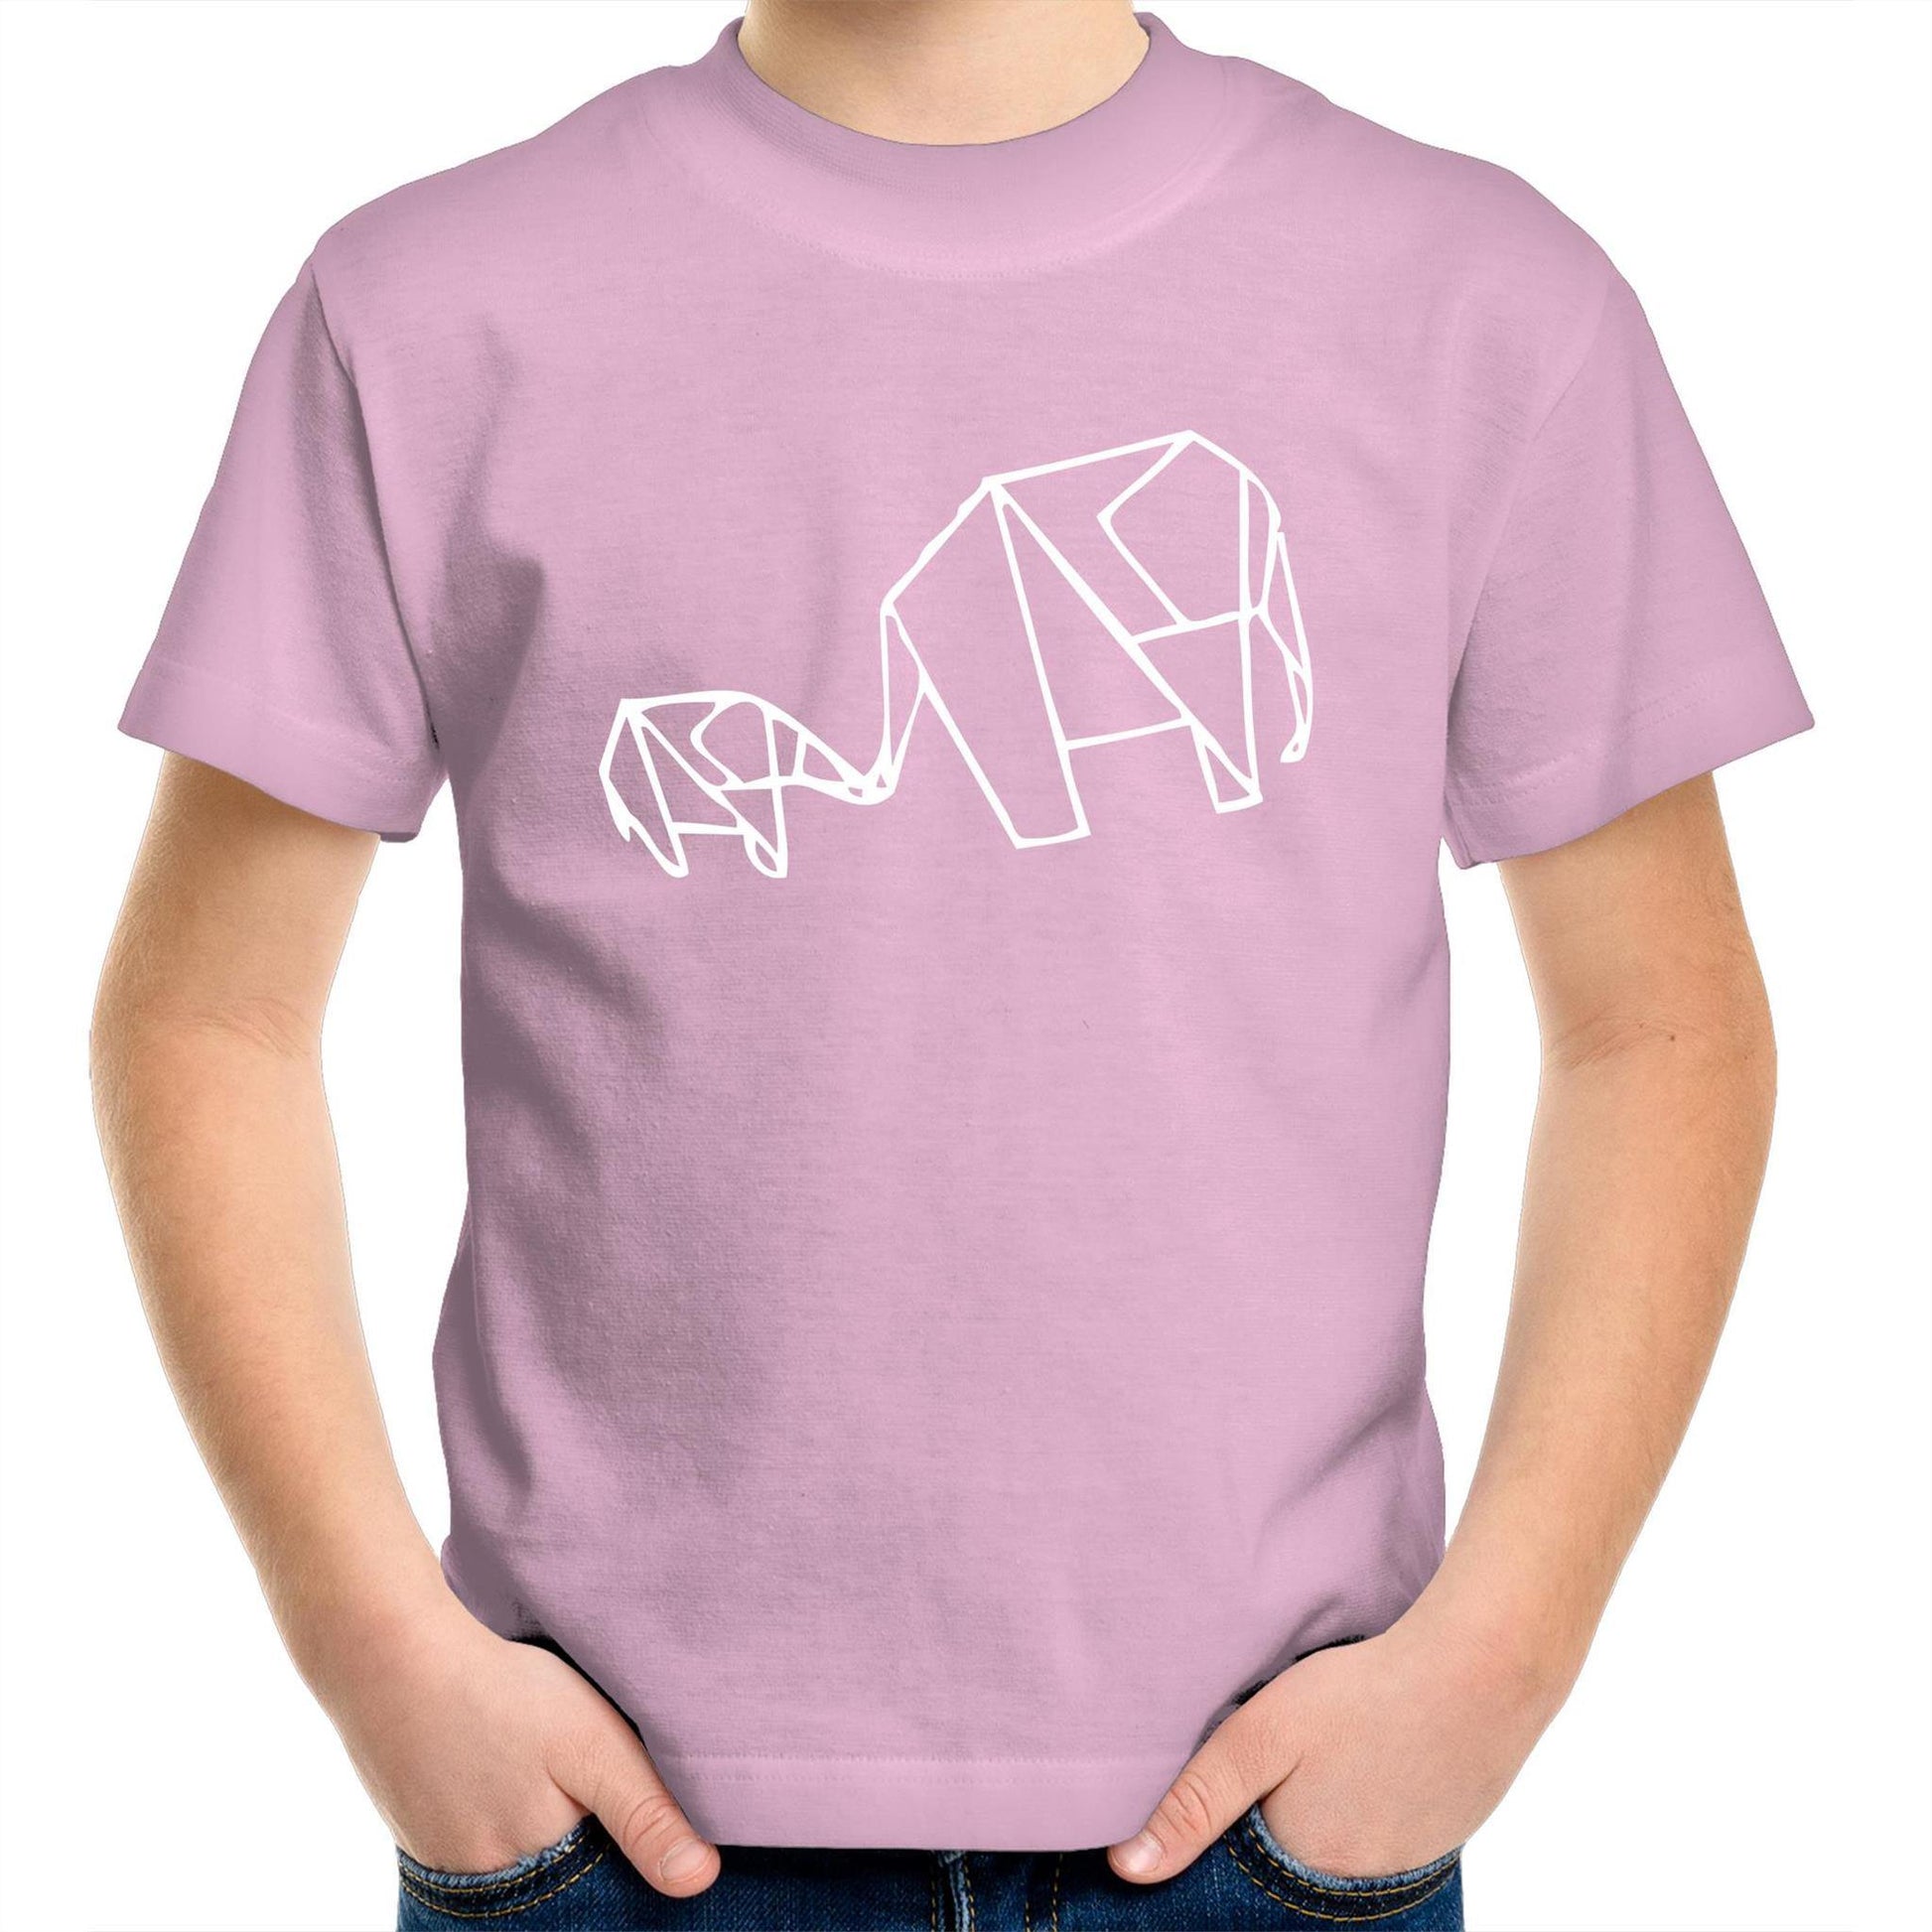 Origami Elephant - Kids Youth Crew T-Shirt Pink Kids Youth T-shirt animal